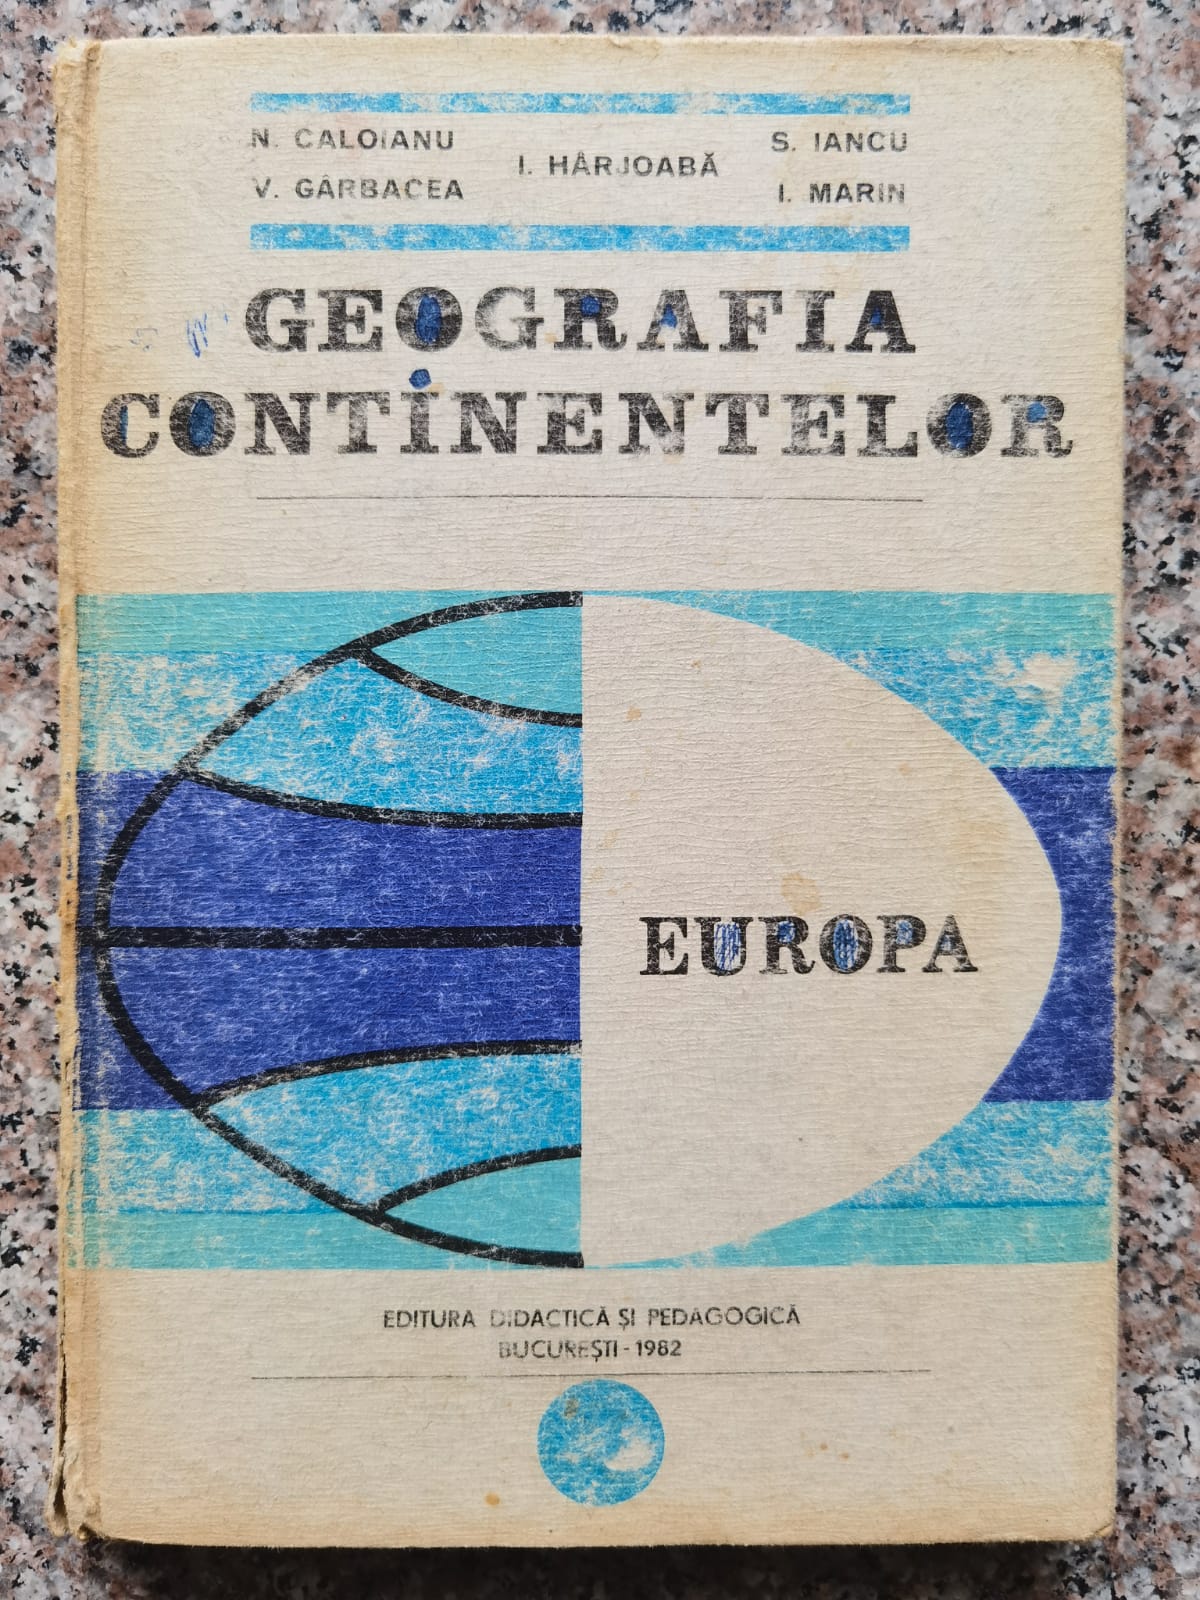 geografia continentelor europa                                                                       n. caloianu v. garbacea i. harjoaba s. iancu i. marin                                               